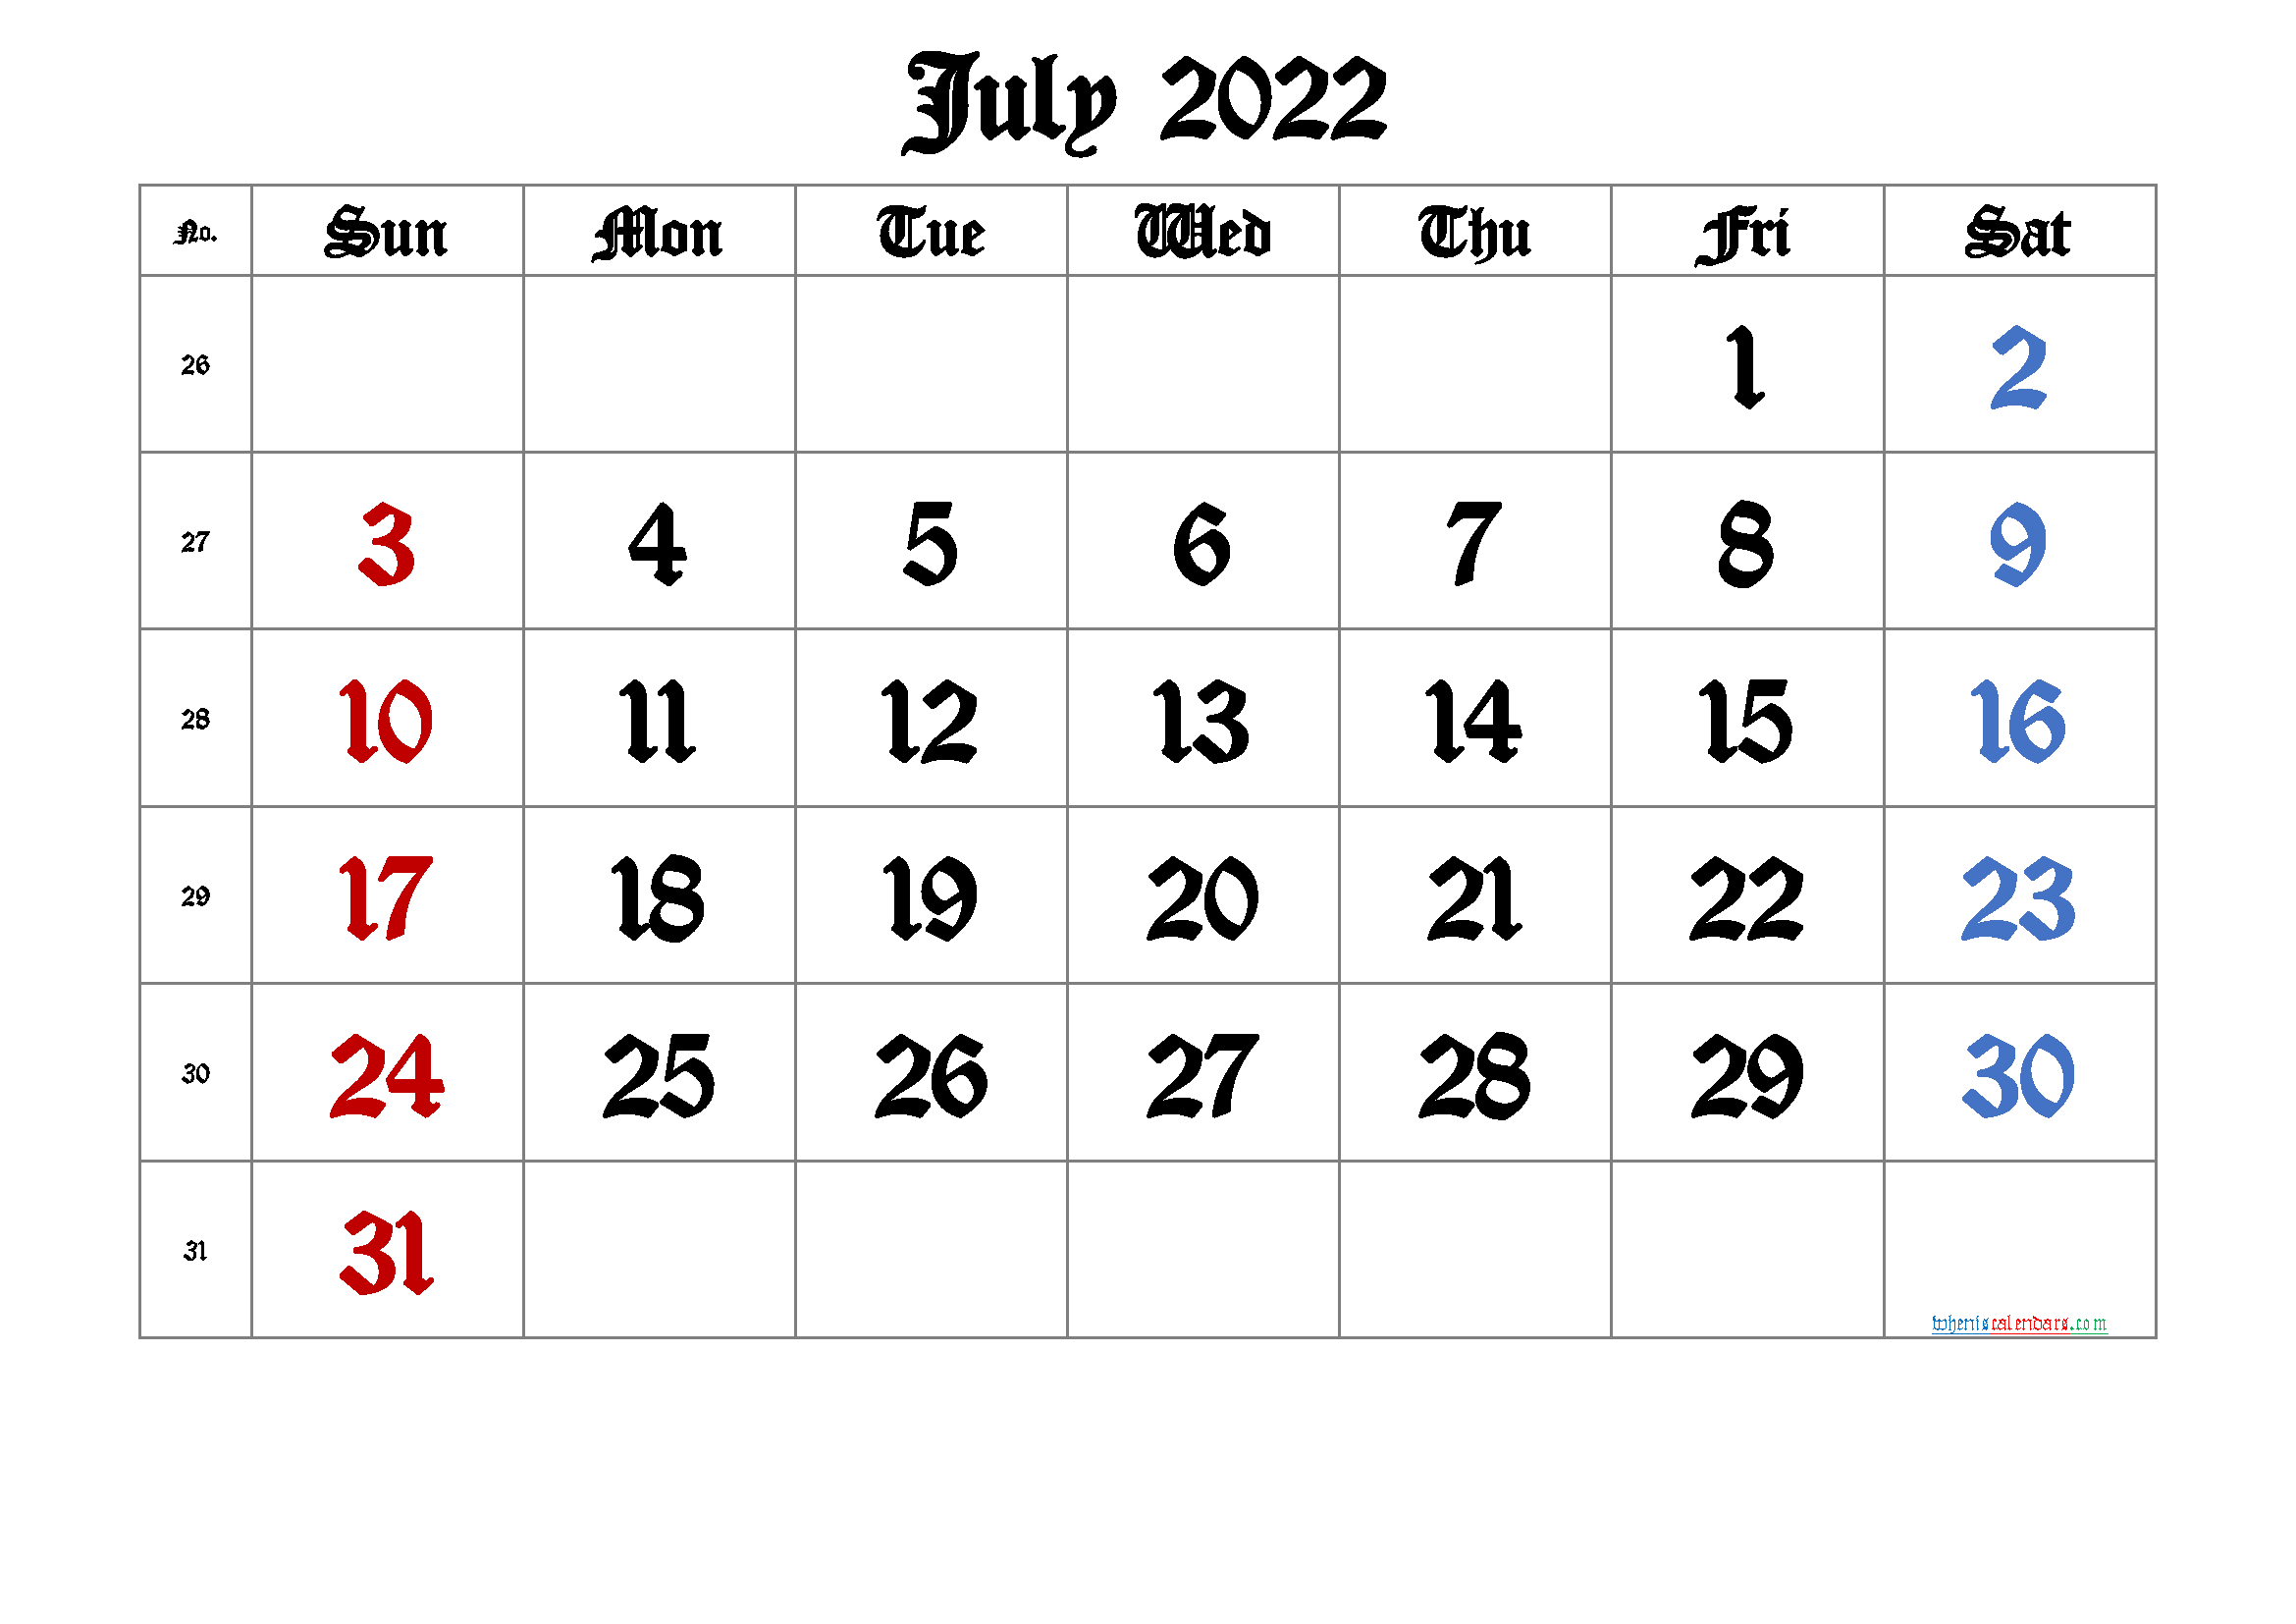 Catch July 2022 Blank Calendar